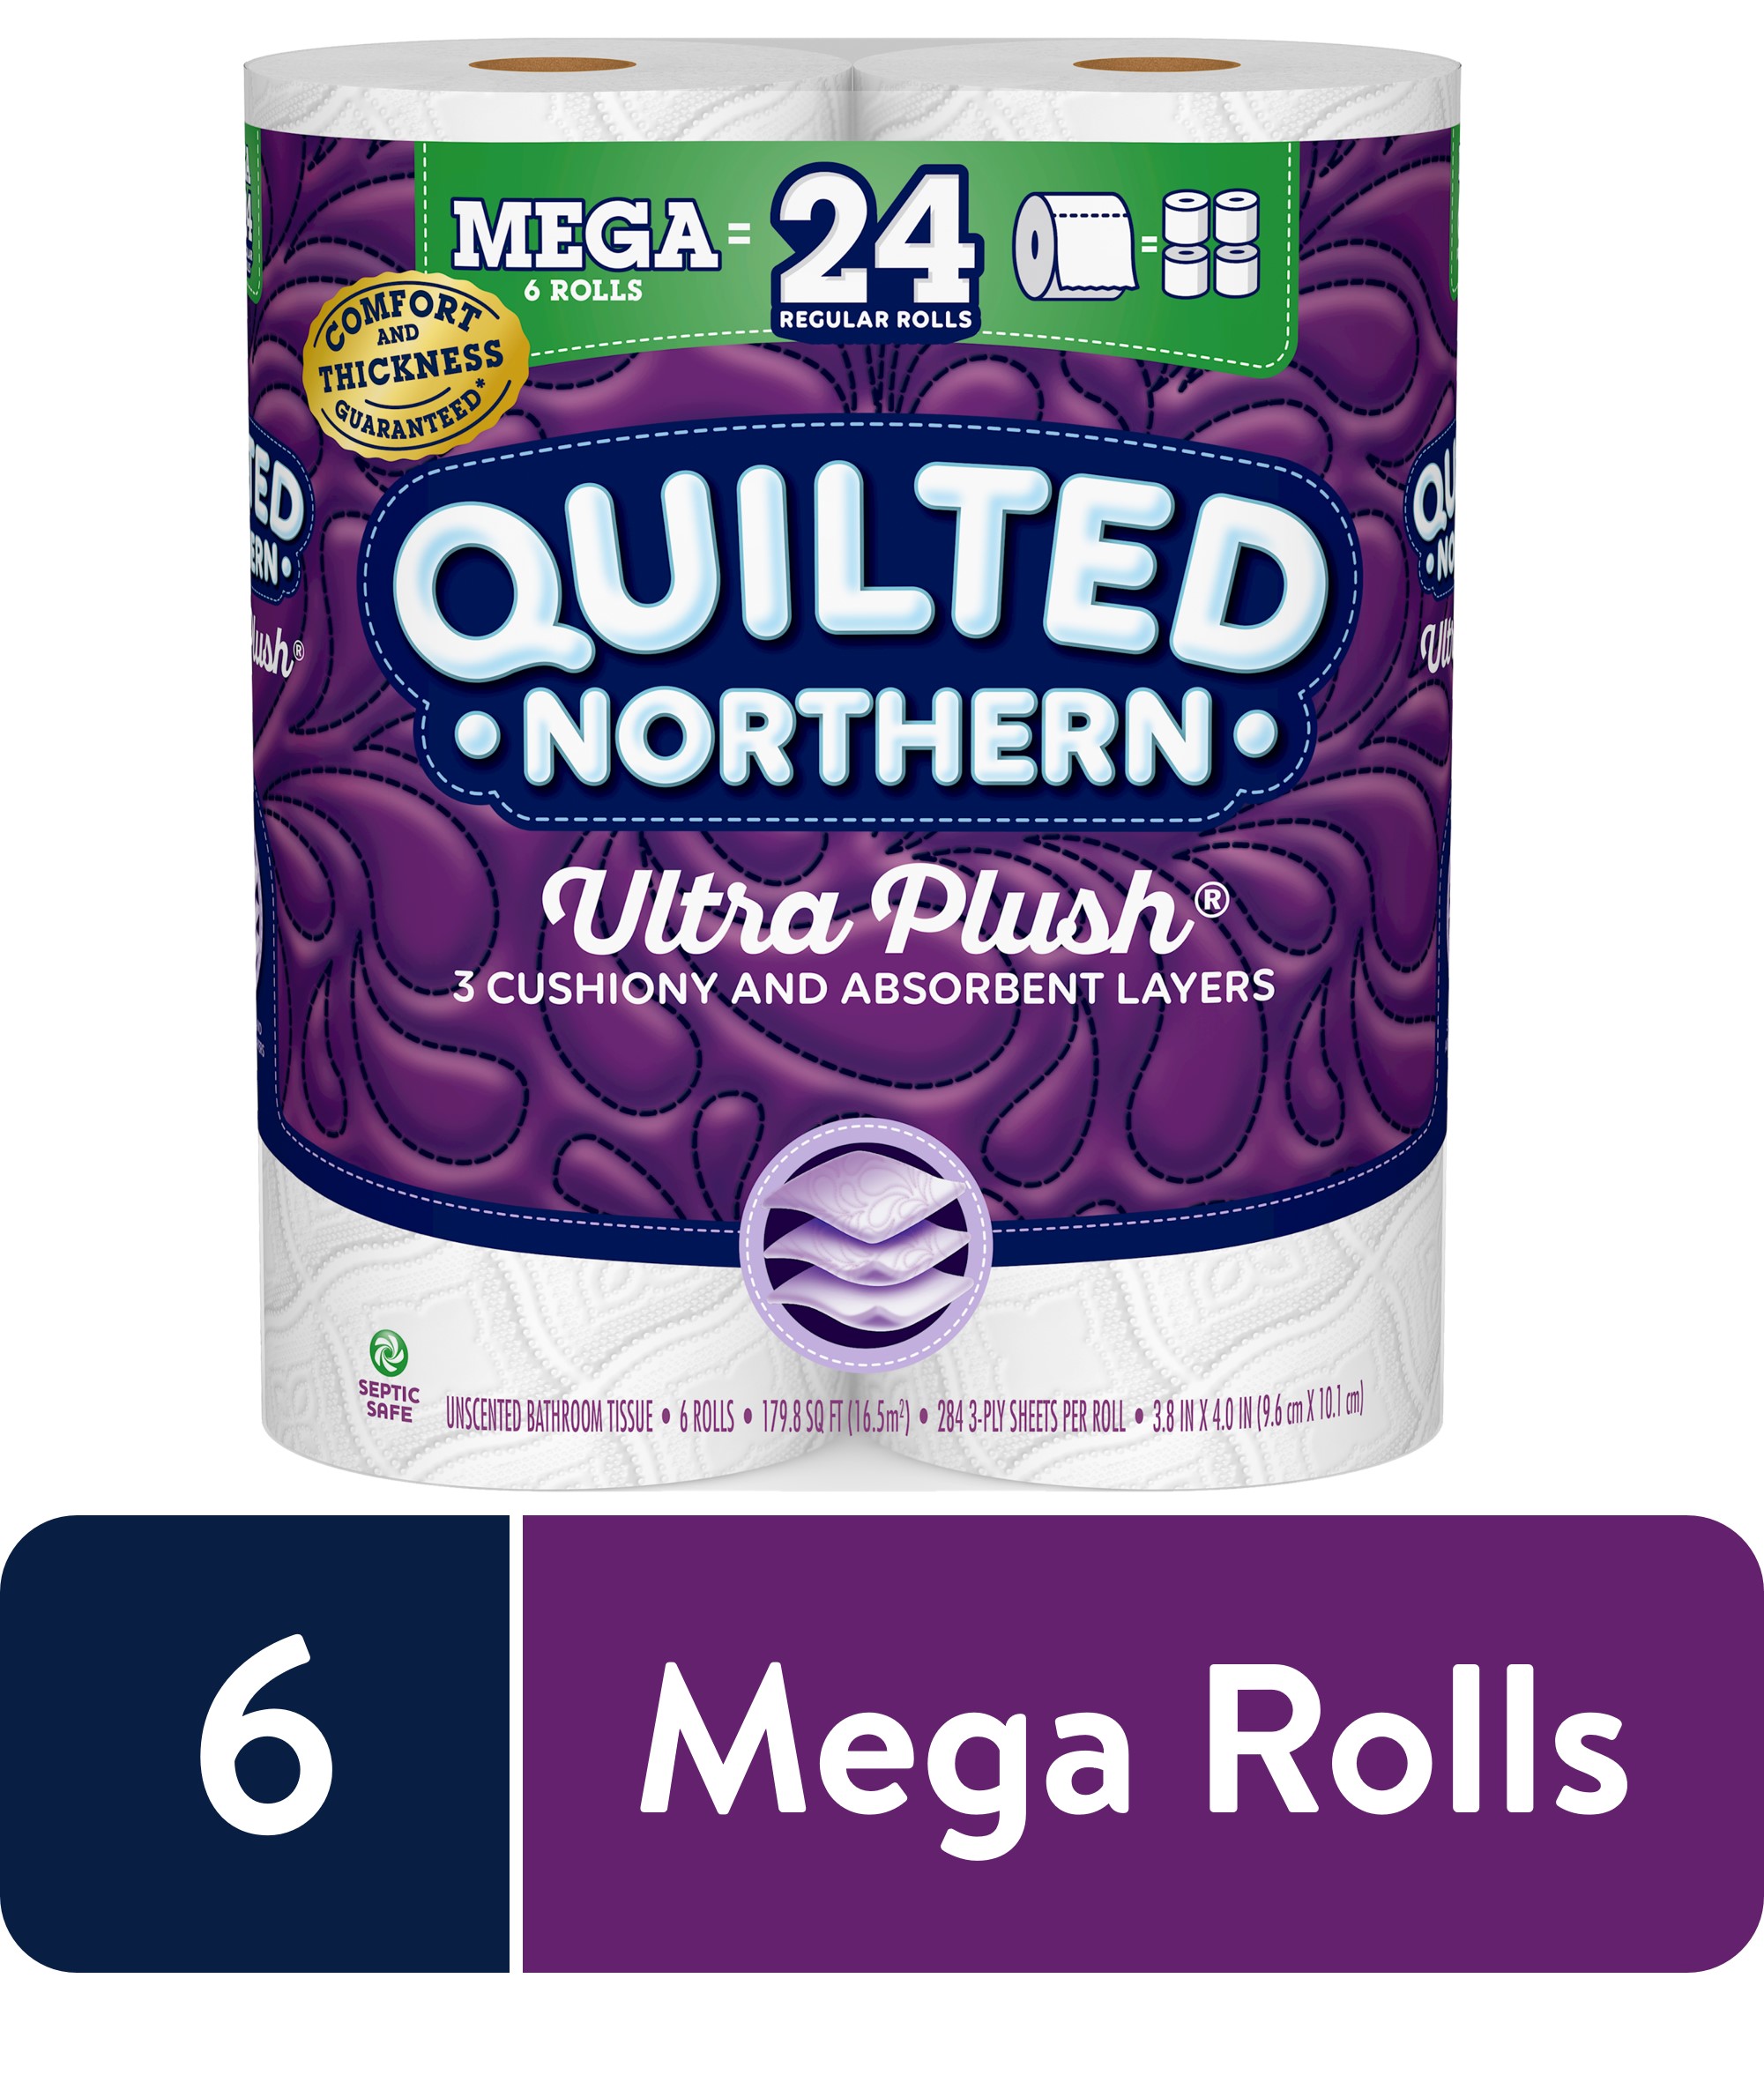 Quilted Northern Ultra Plush Toilet Paper, 6 Mega Rolls (= 24 Regular Rolls) - image 1 of 11